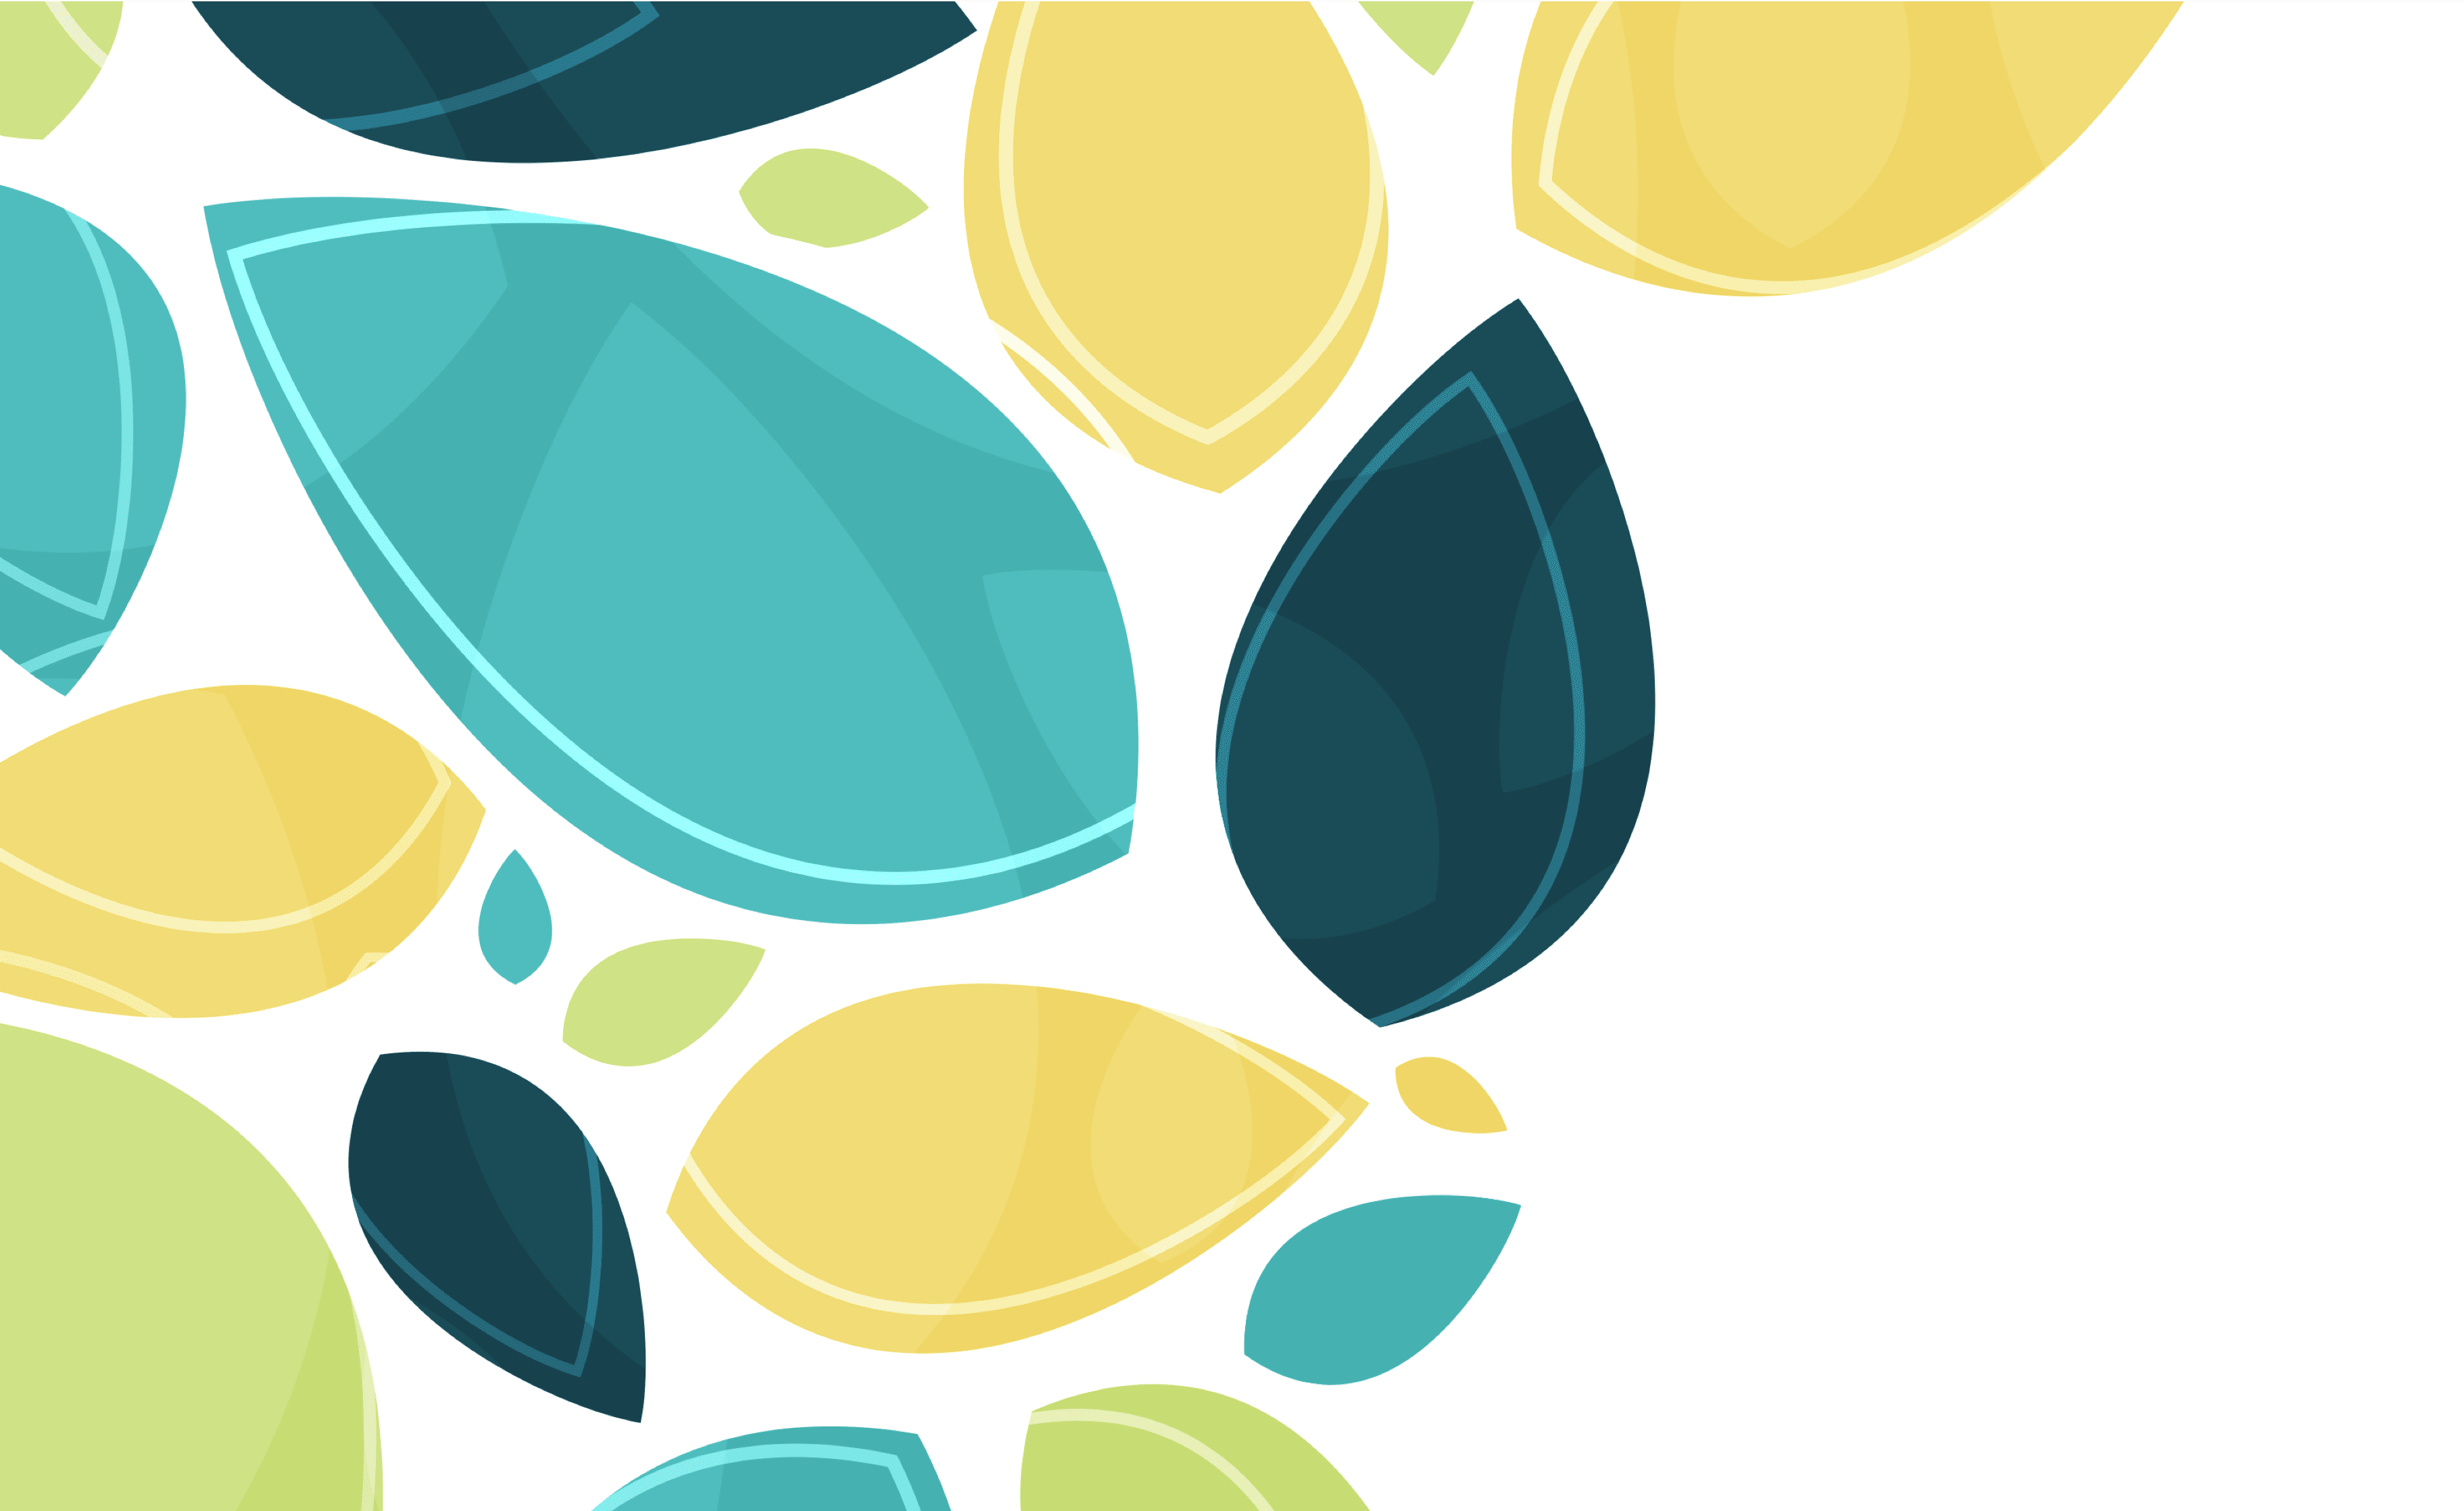 stylized illustration of leaves